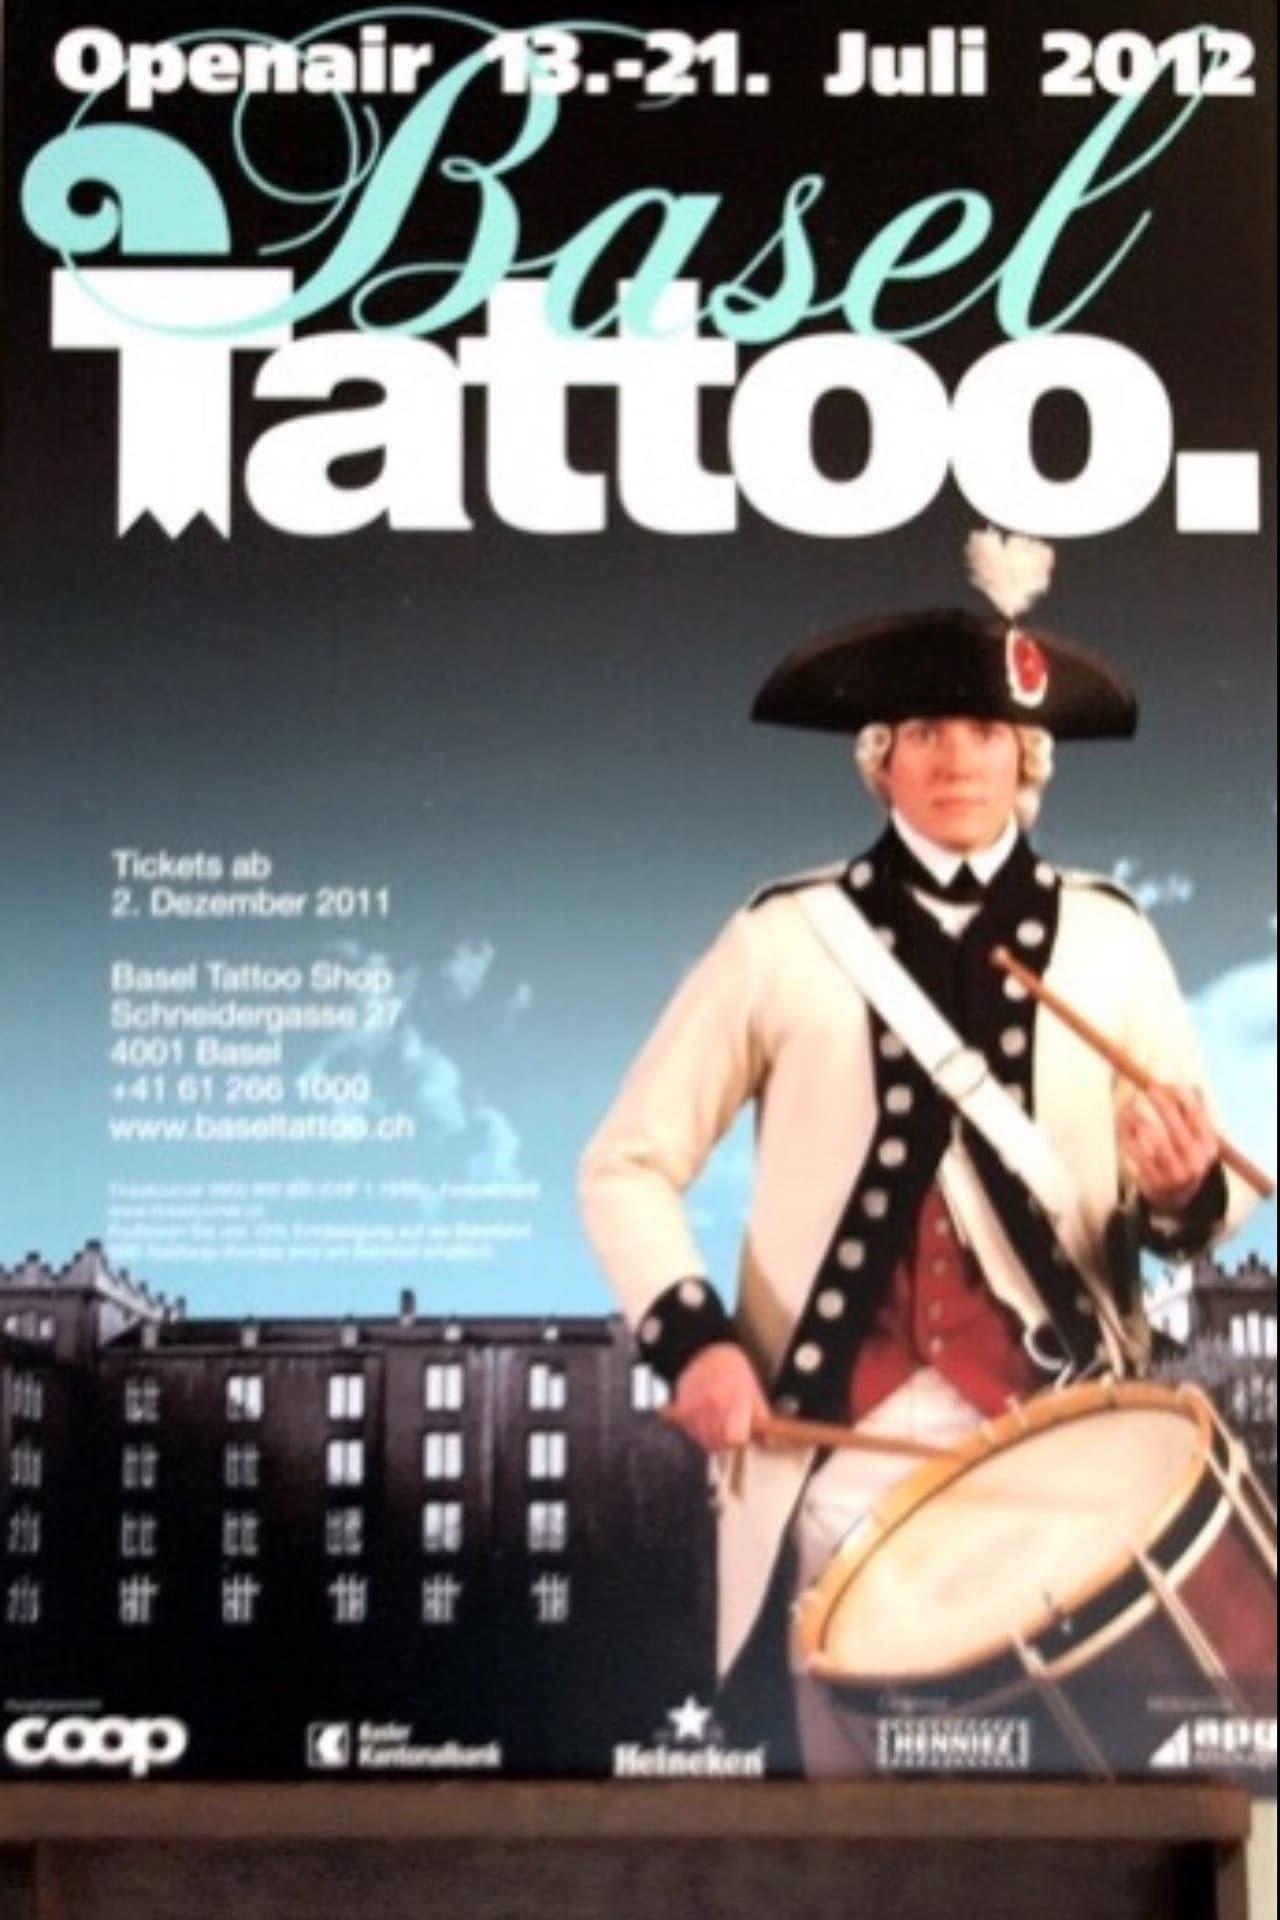 Basel Tattoo 2012 poster